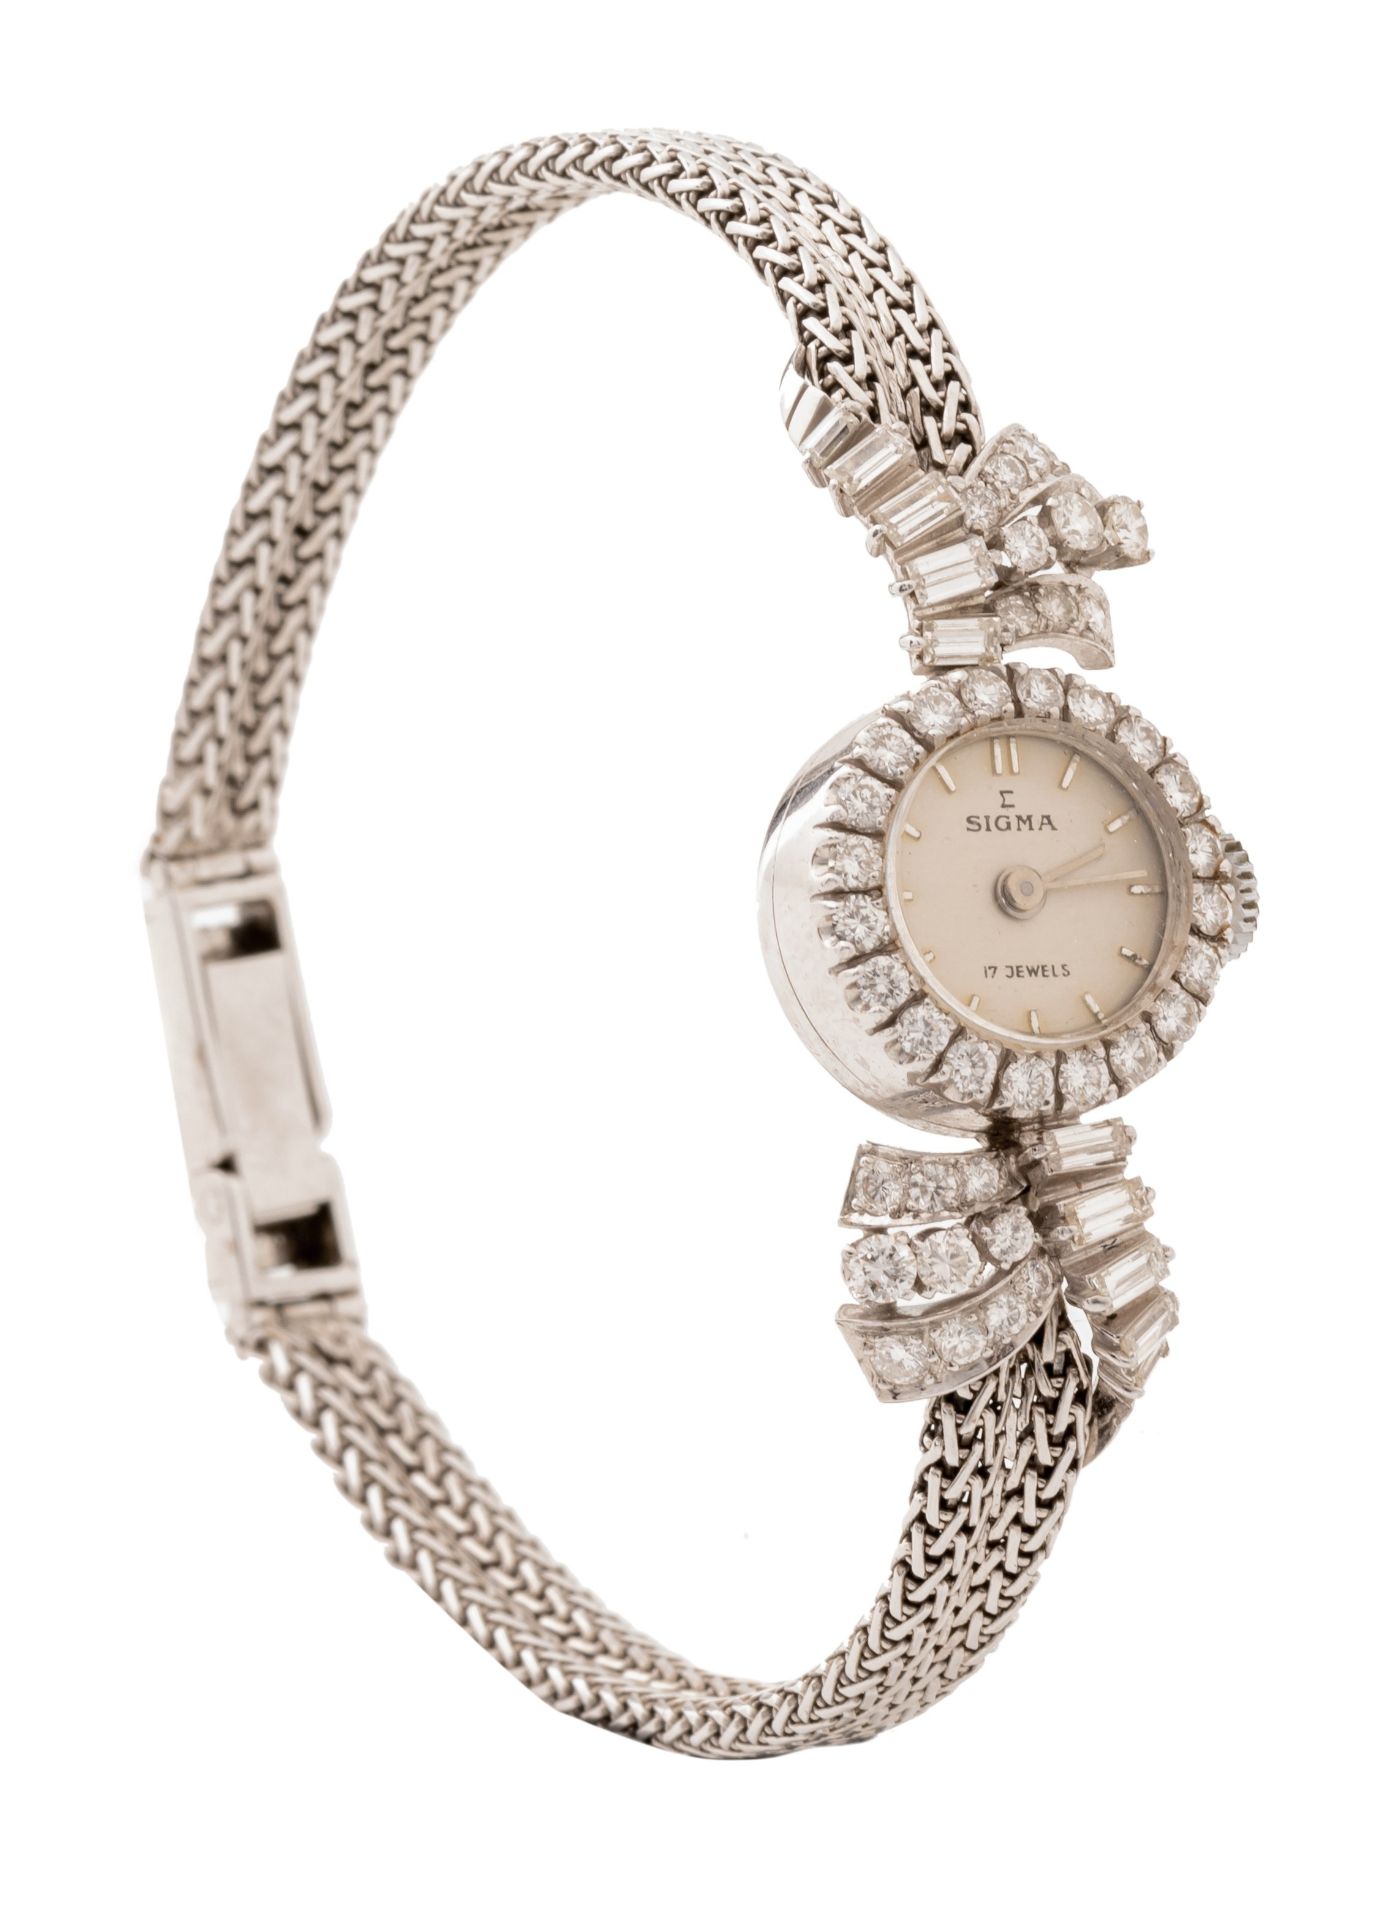 An 18ct platinum Sigma ladies' watch, set with brilliant-cut diamonds